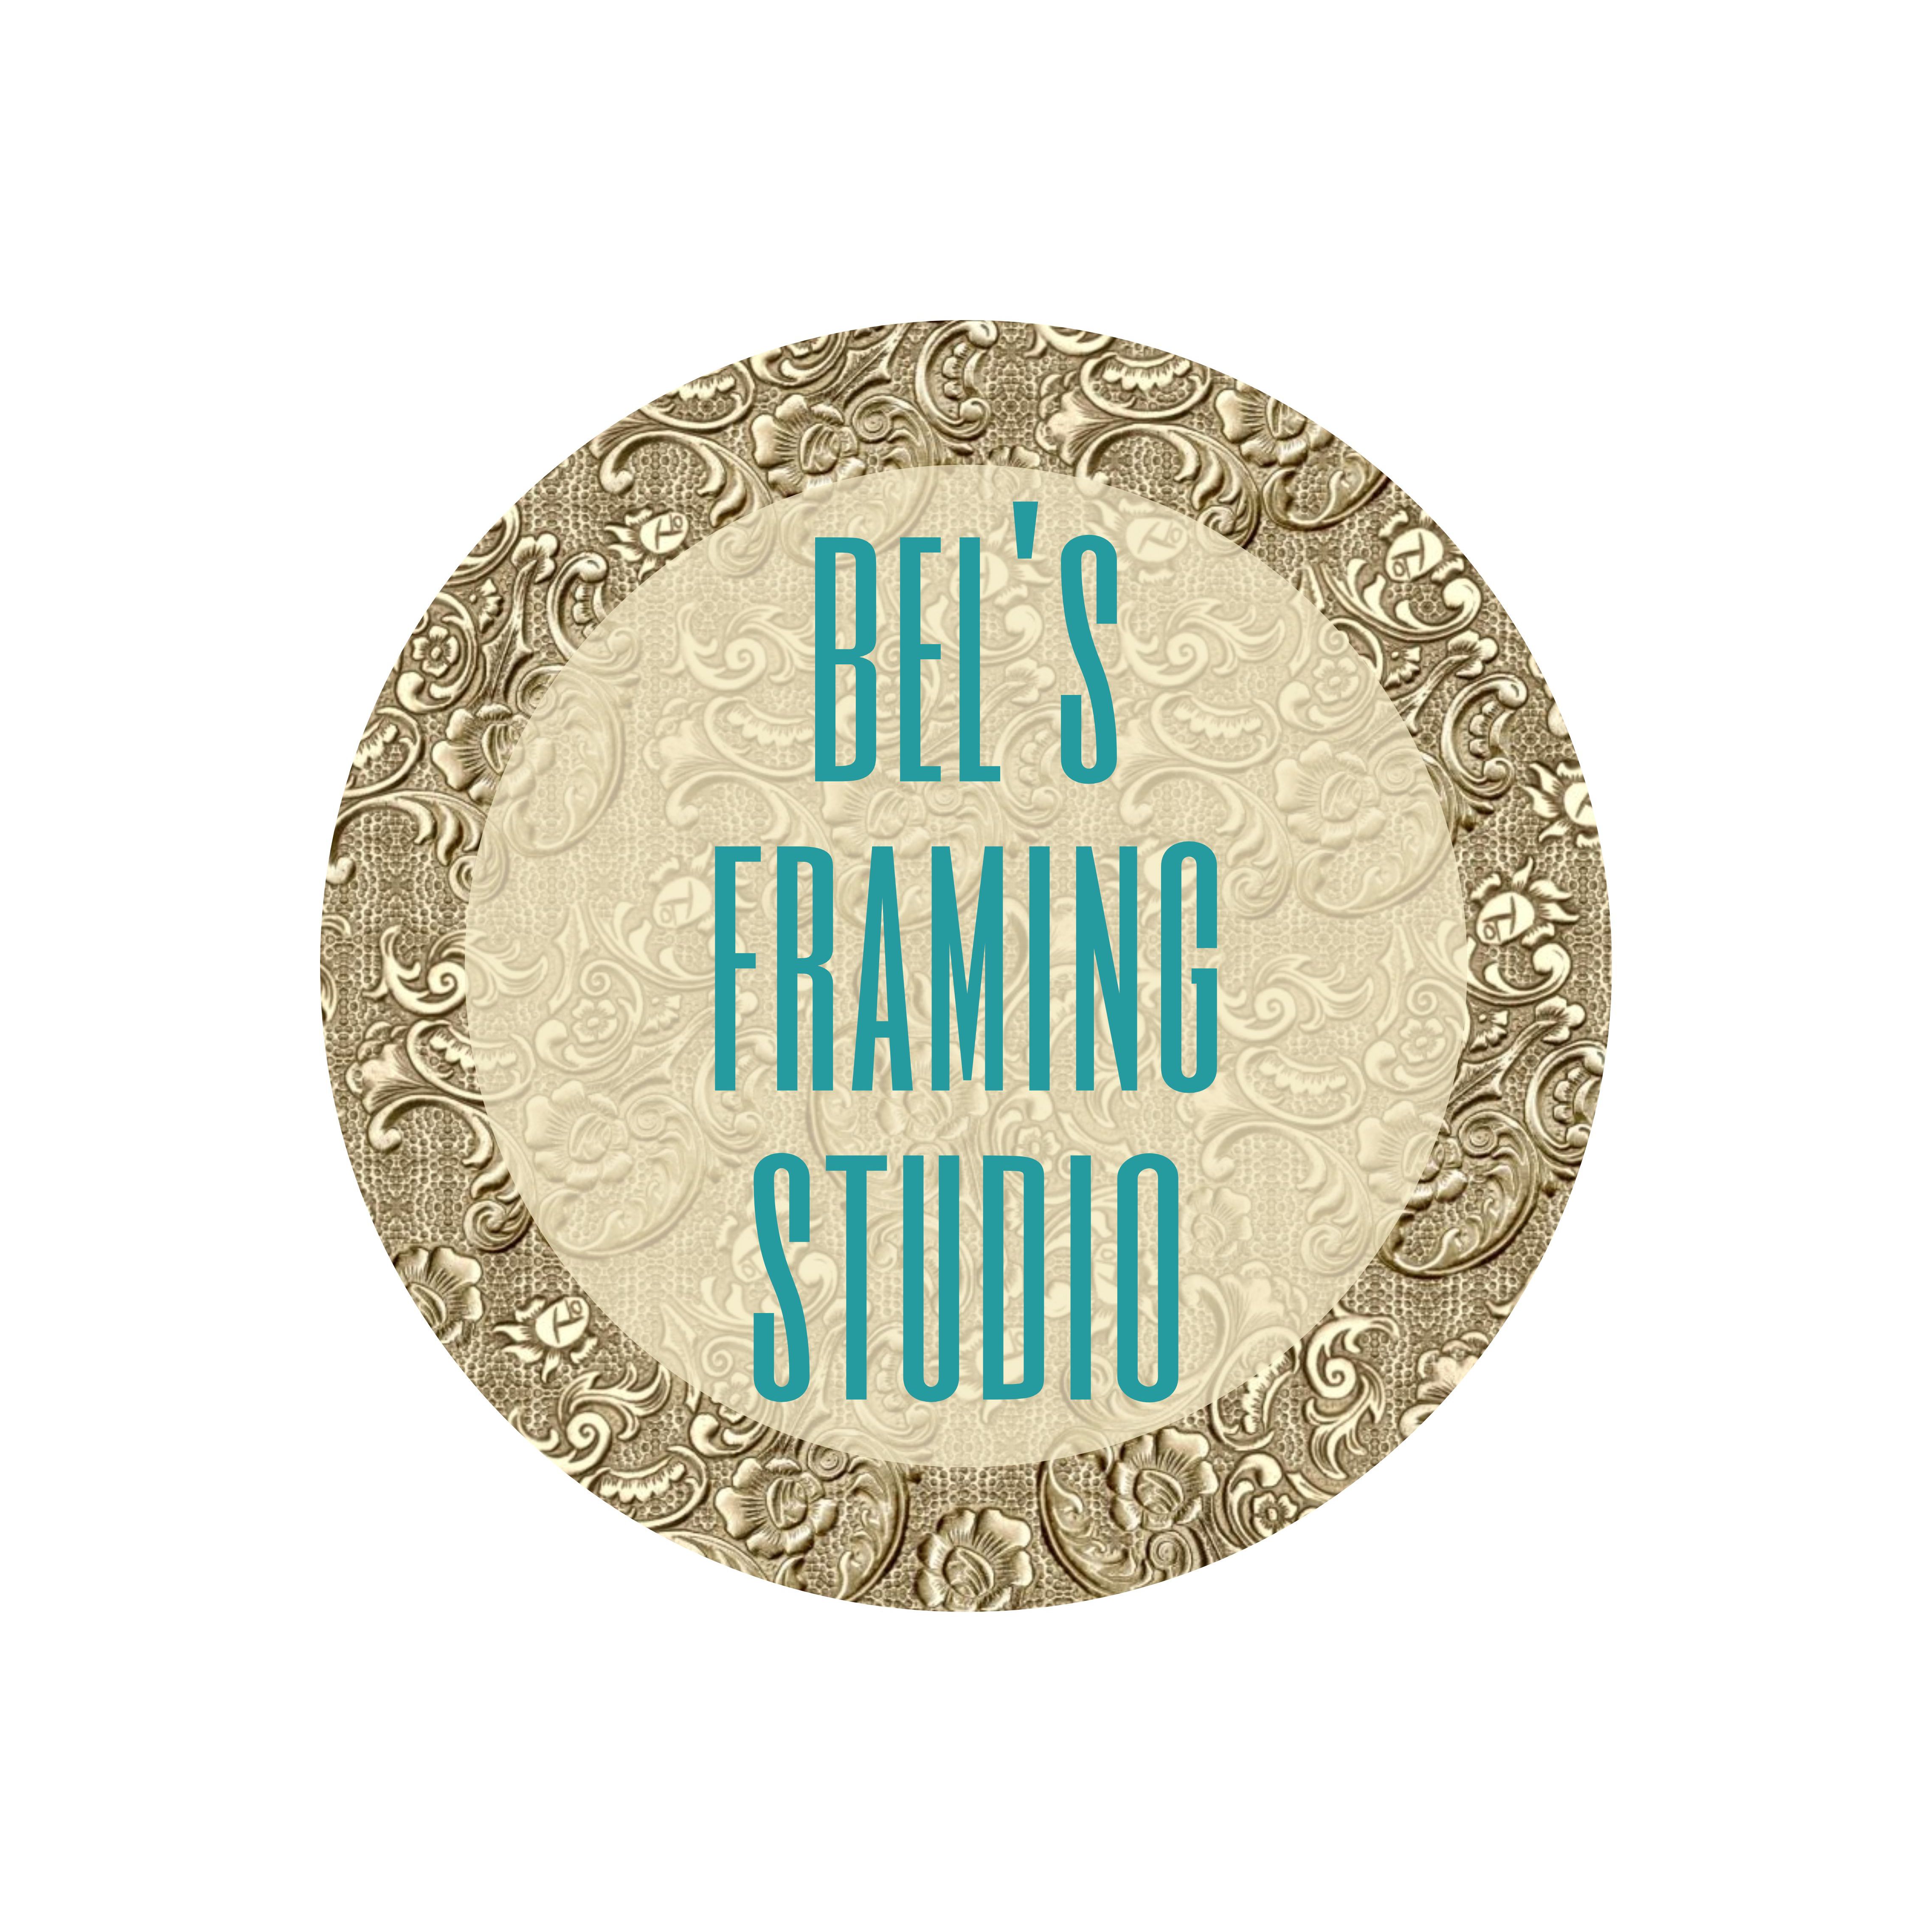 Bel's Framing Studio - Highfields, QLD - 0447 736 474 | ShowMeLocal.com